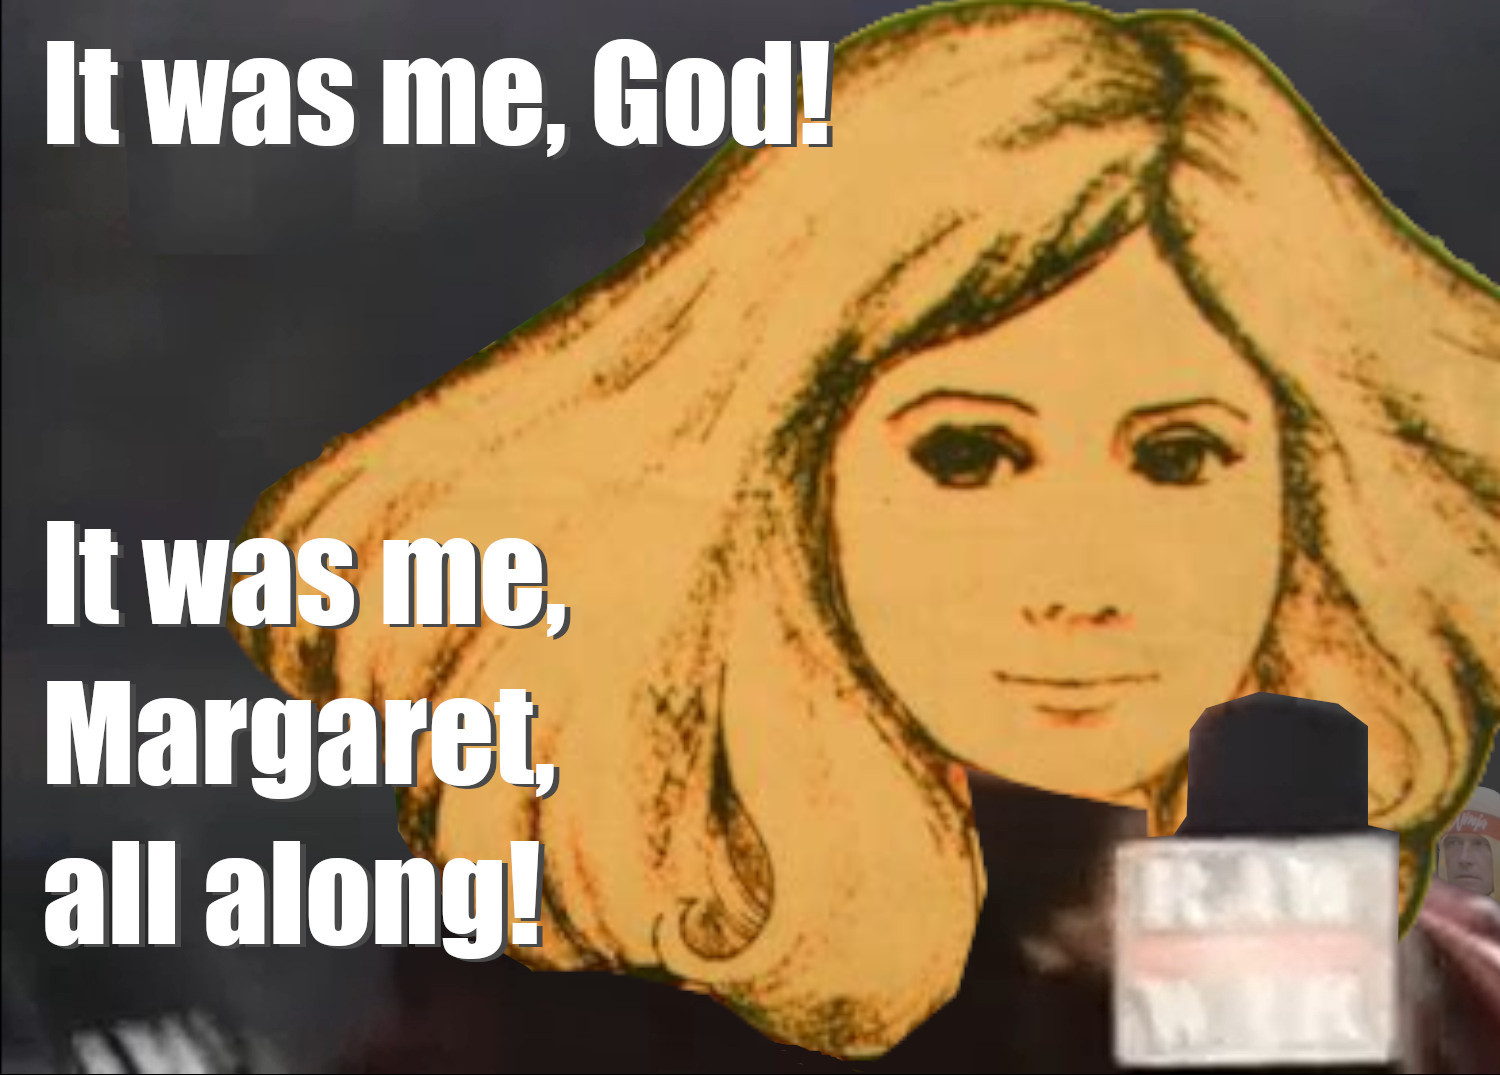 It was me, God!  It was me, Margaret, all along!